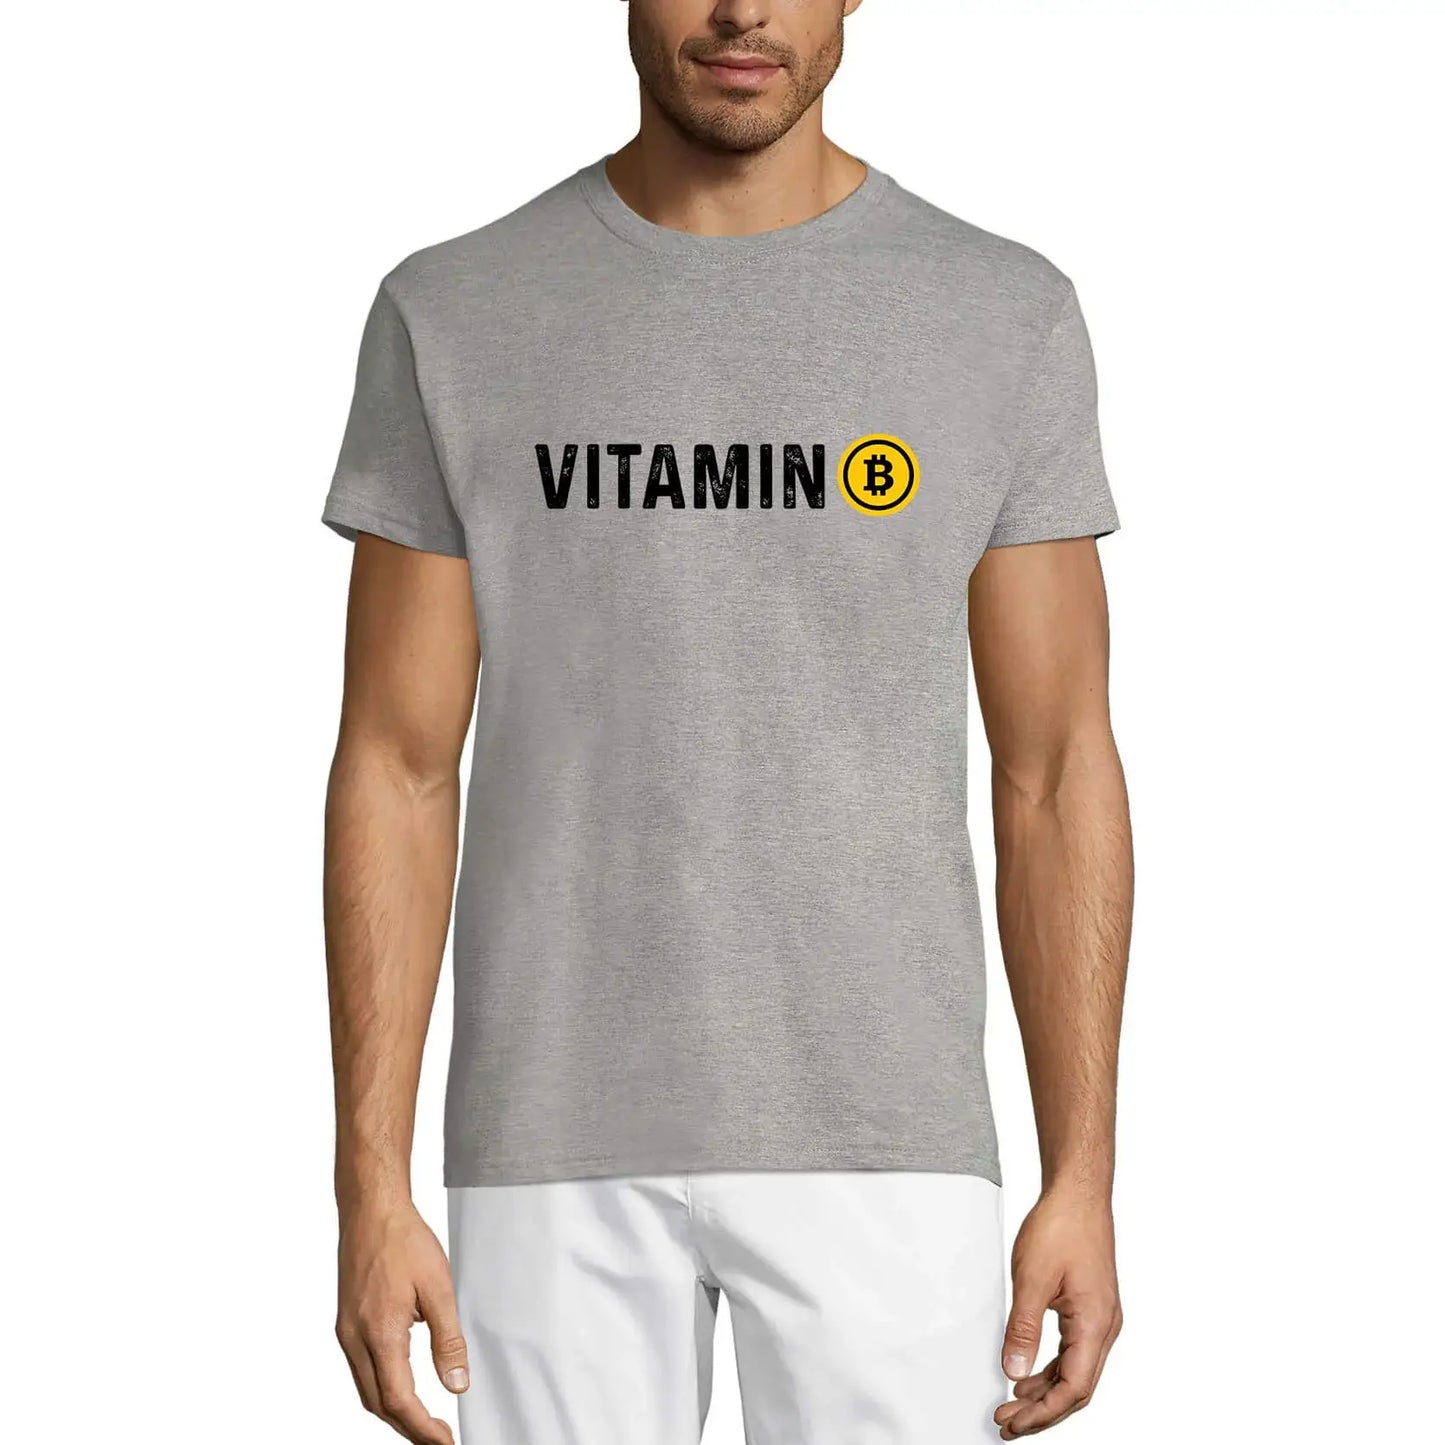 Men's Graphic T-Shirt Vitamin Bitcoin - Btc Hodl Shirt - Crypto Idea Eco-Friendly Limited Edition Short Sleeve Tee-Shirt Vintage Birthday Gift Novelty